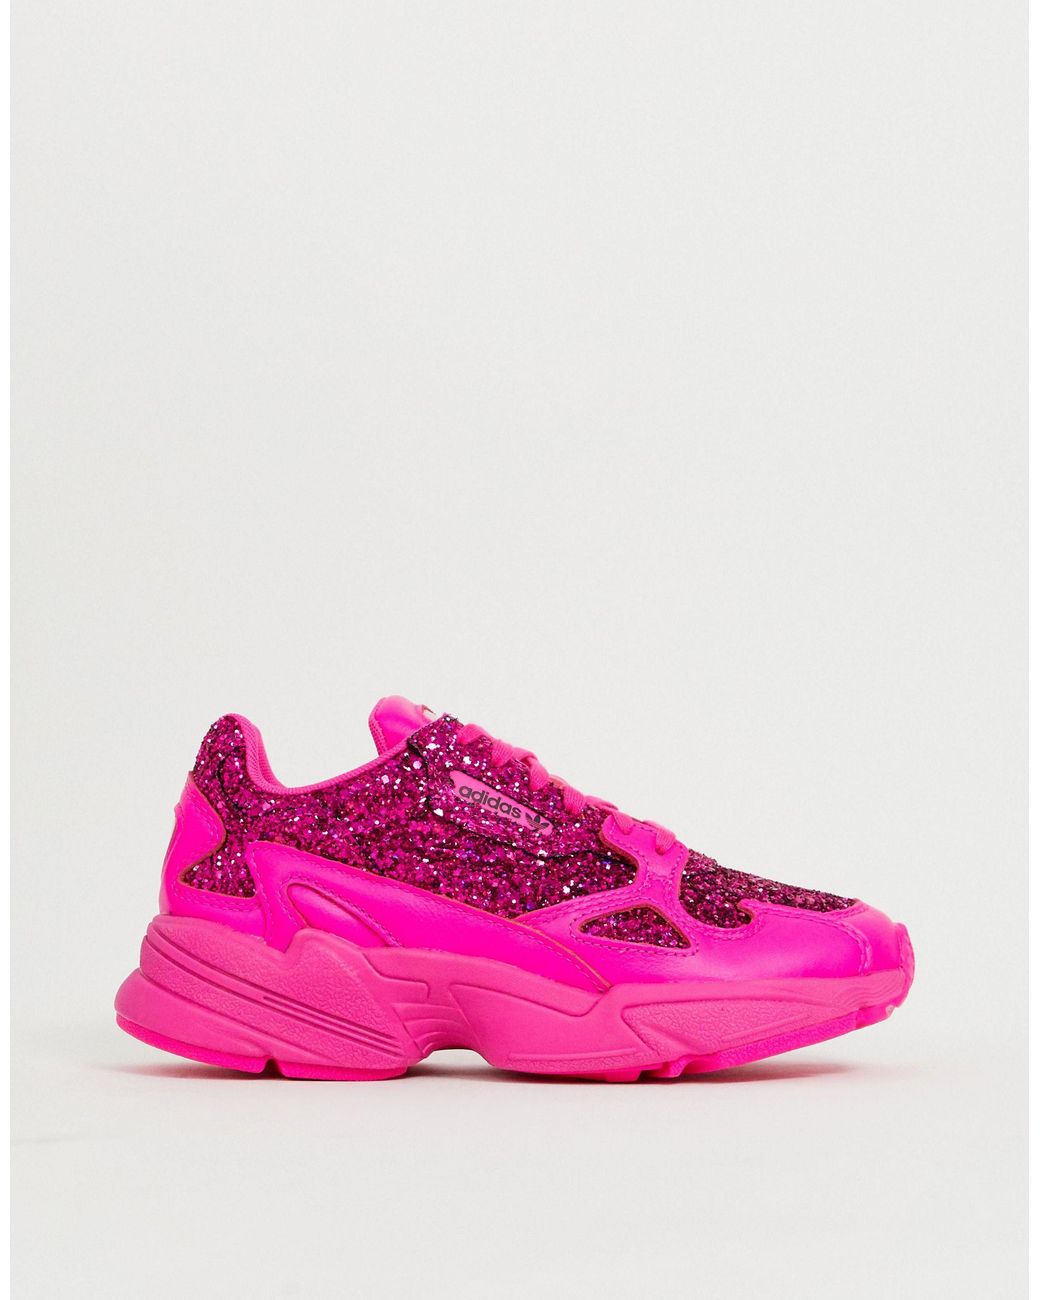 adidas Originals Premium Pink Glitter Falcon Sneakers | Lyst Canada